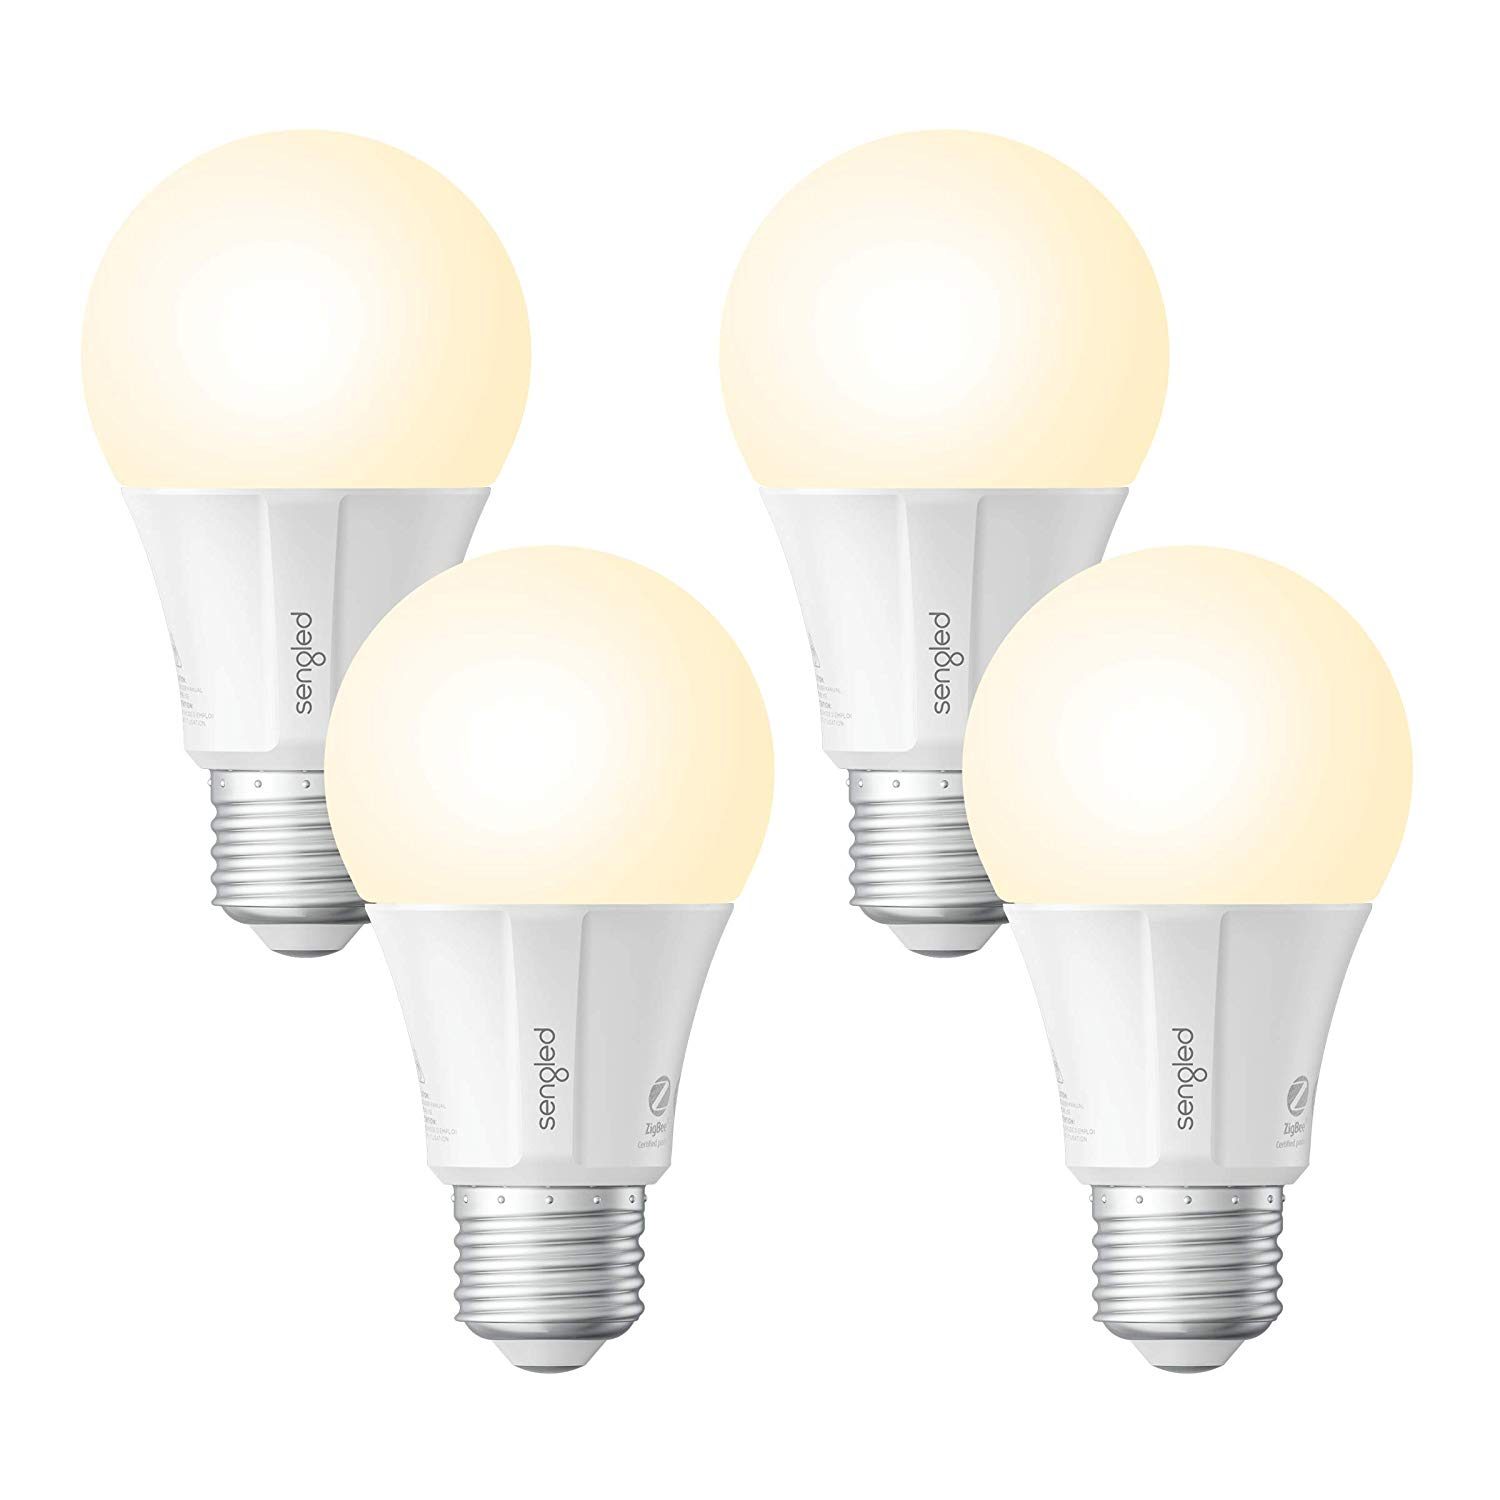 Smart Light Bulbs That Work With Amazon Alexa | Family Handyman